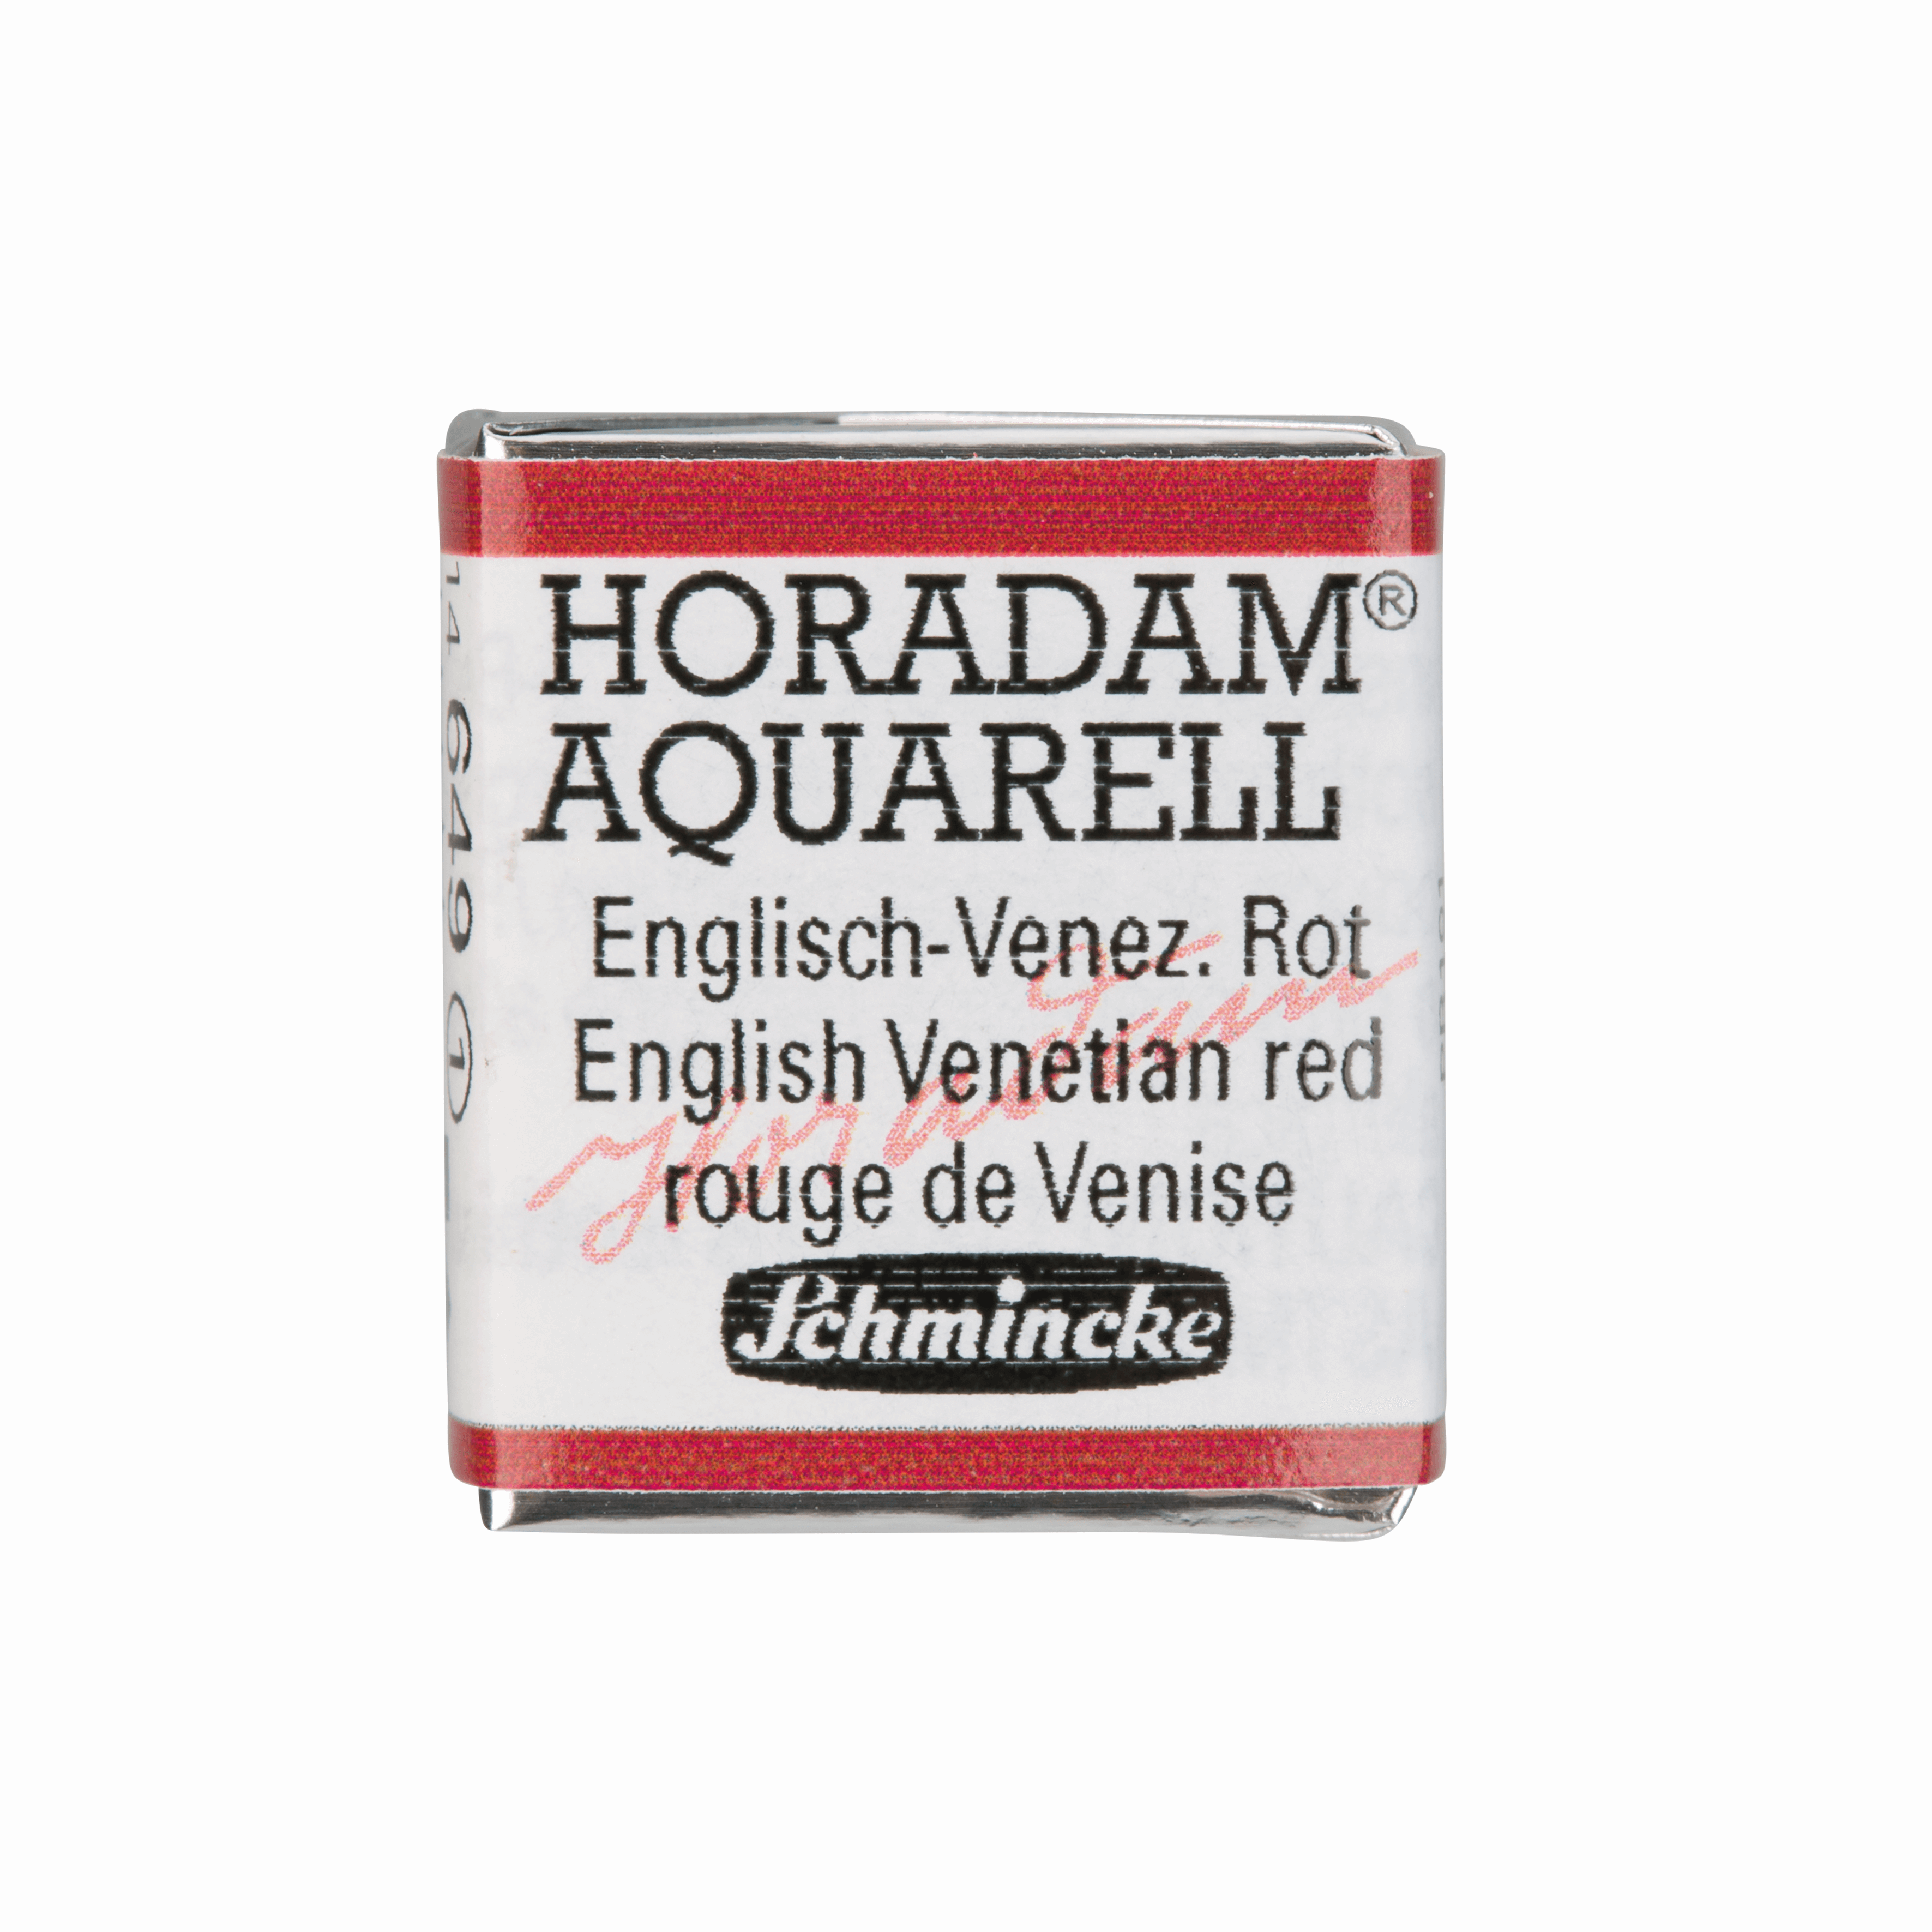 Schmincke Horadam Aquarell pans 1/2 pan English Venetian Red